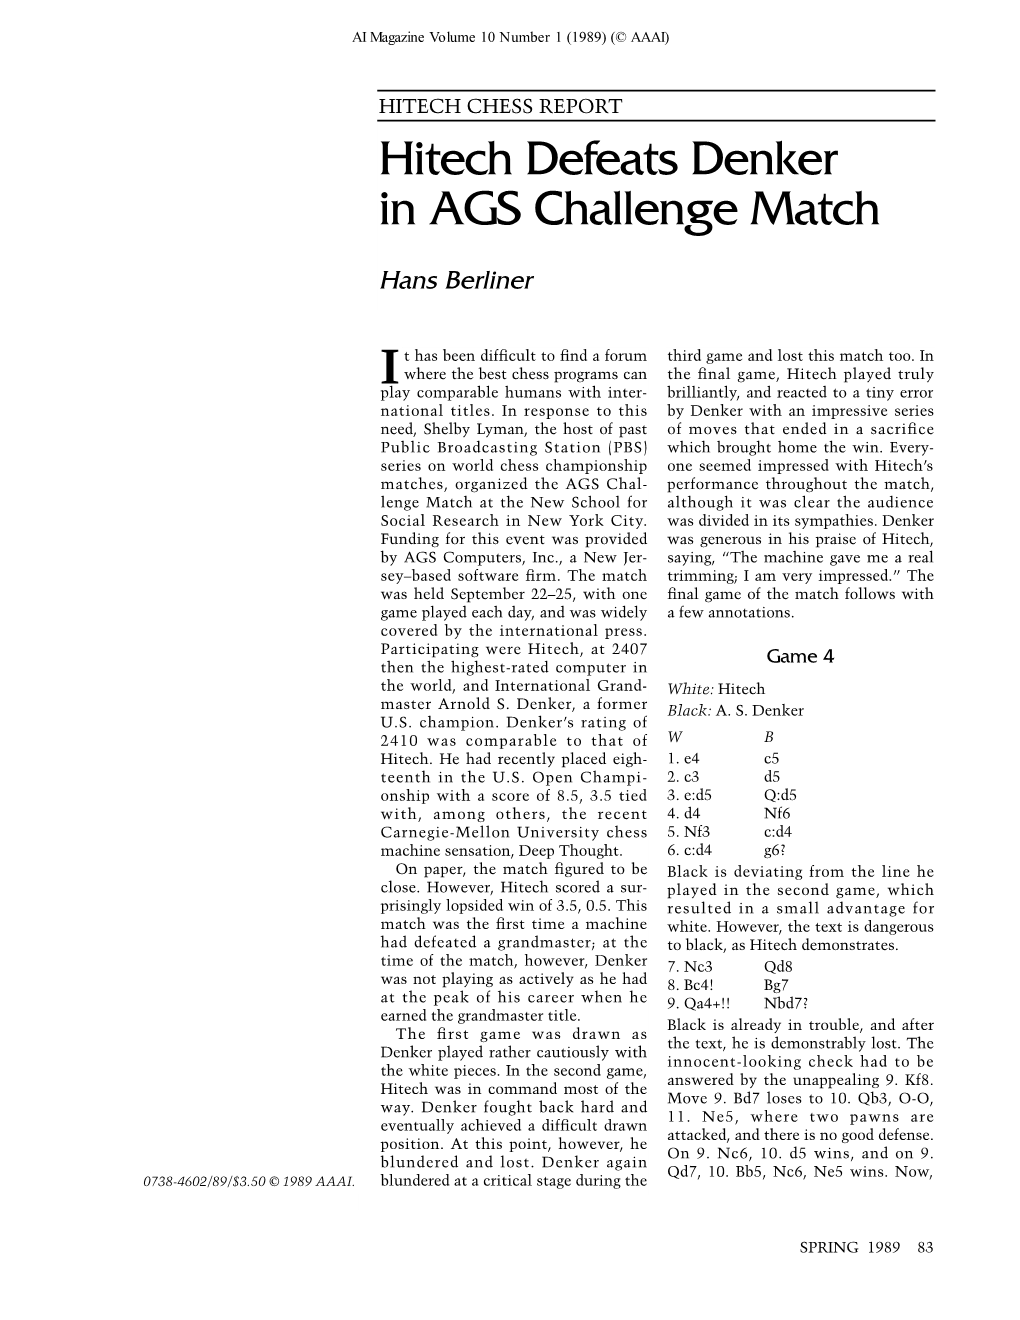 Hitech Defeats Denker in AGS Challenge Match